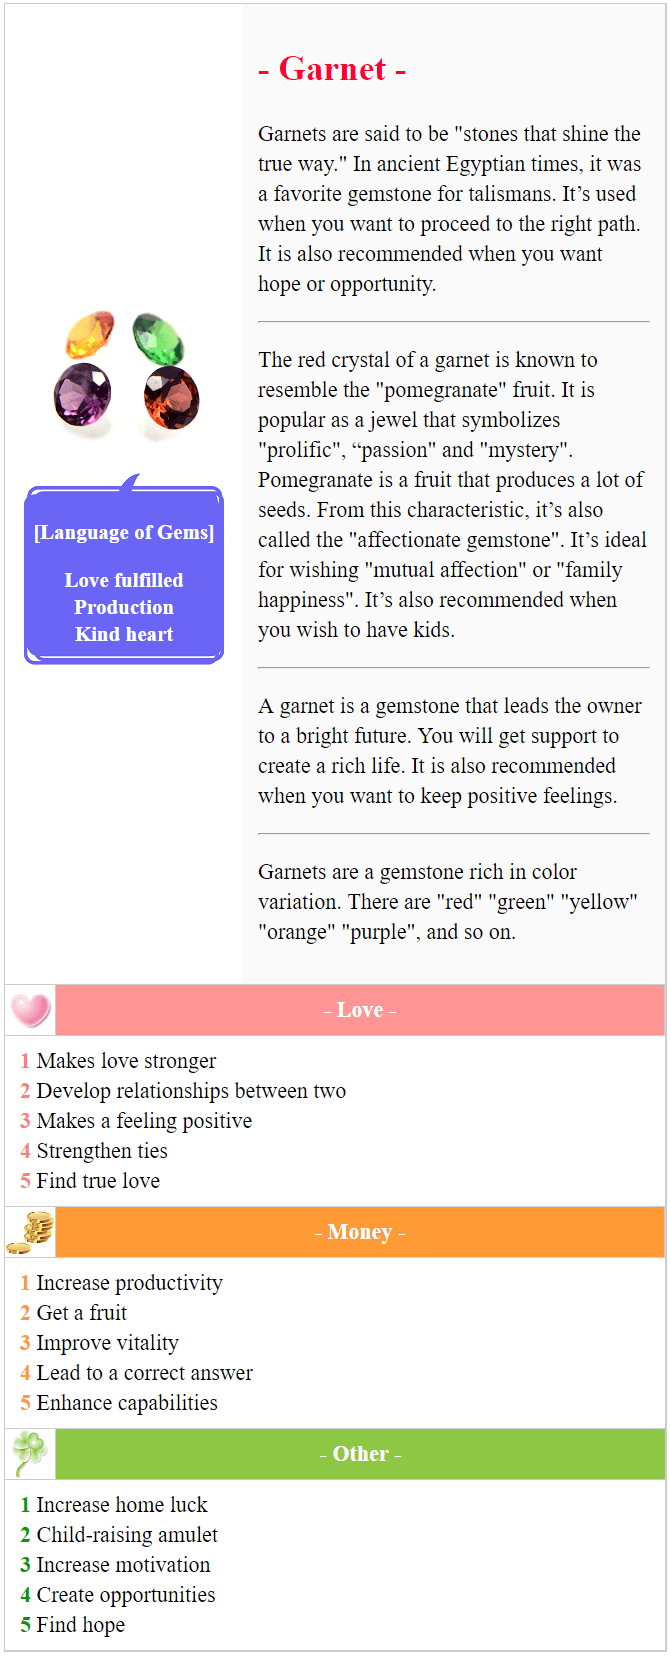 Garnet meaning